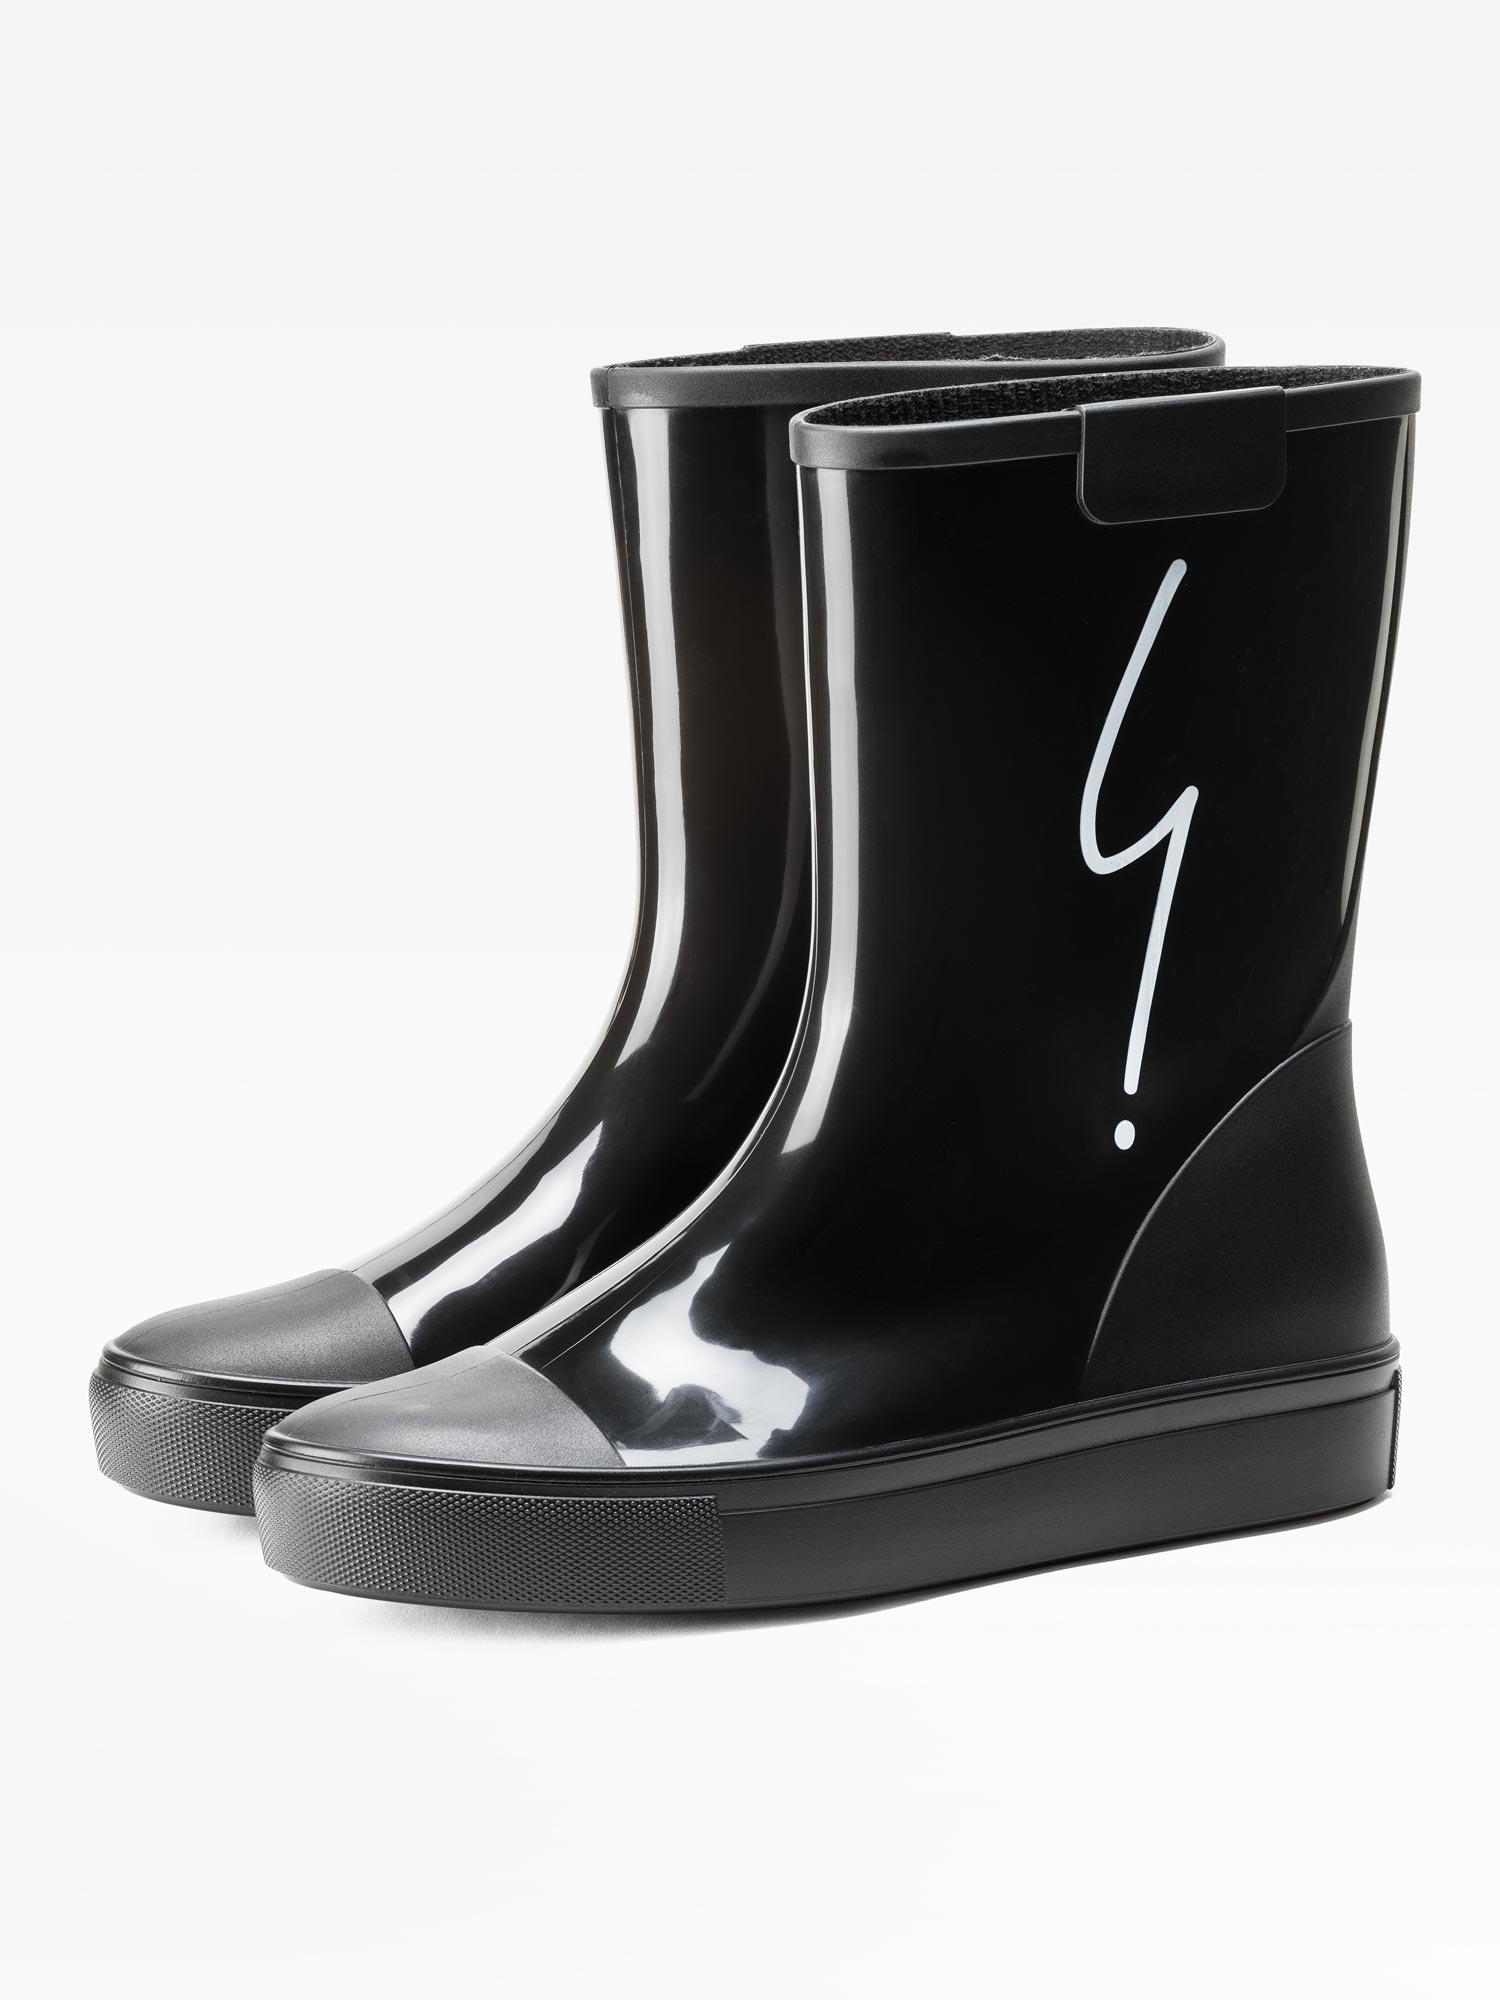 black rain boots